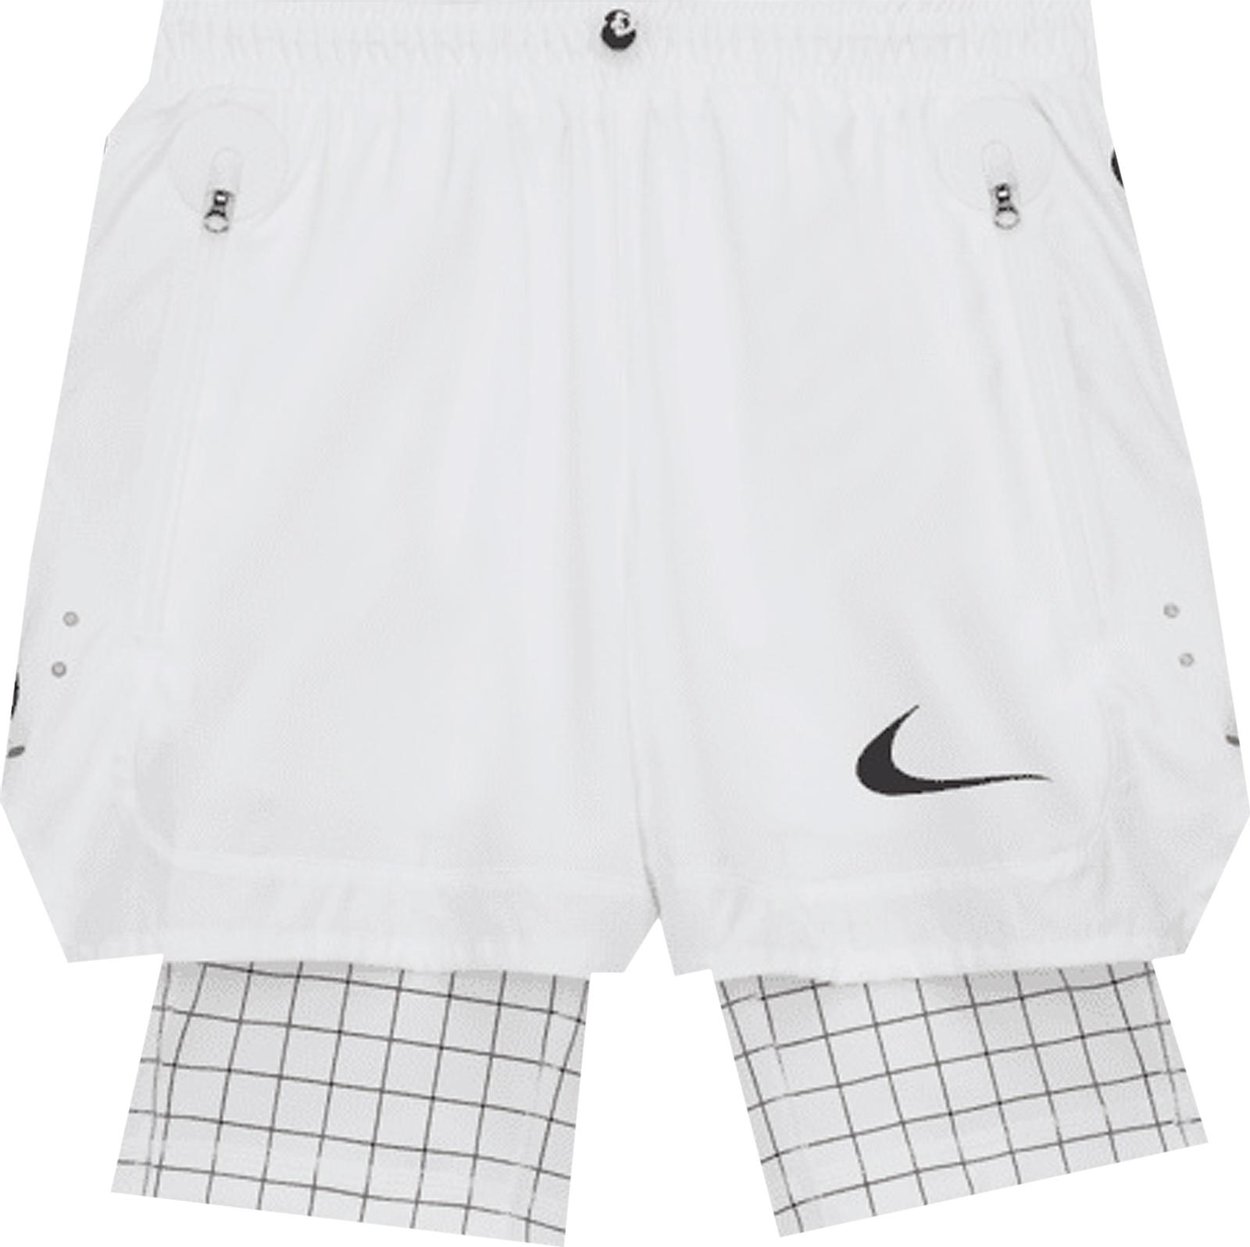 Buy Nike x Off-White Shorts 'White' - CU2502 100 | GOAT